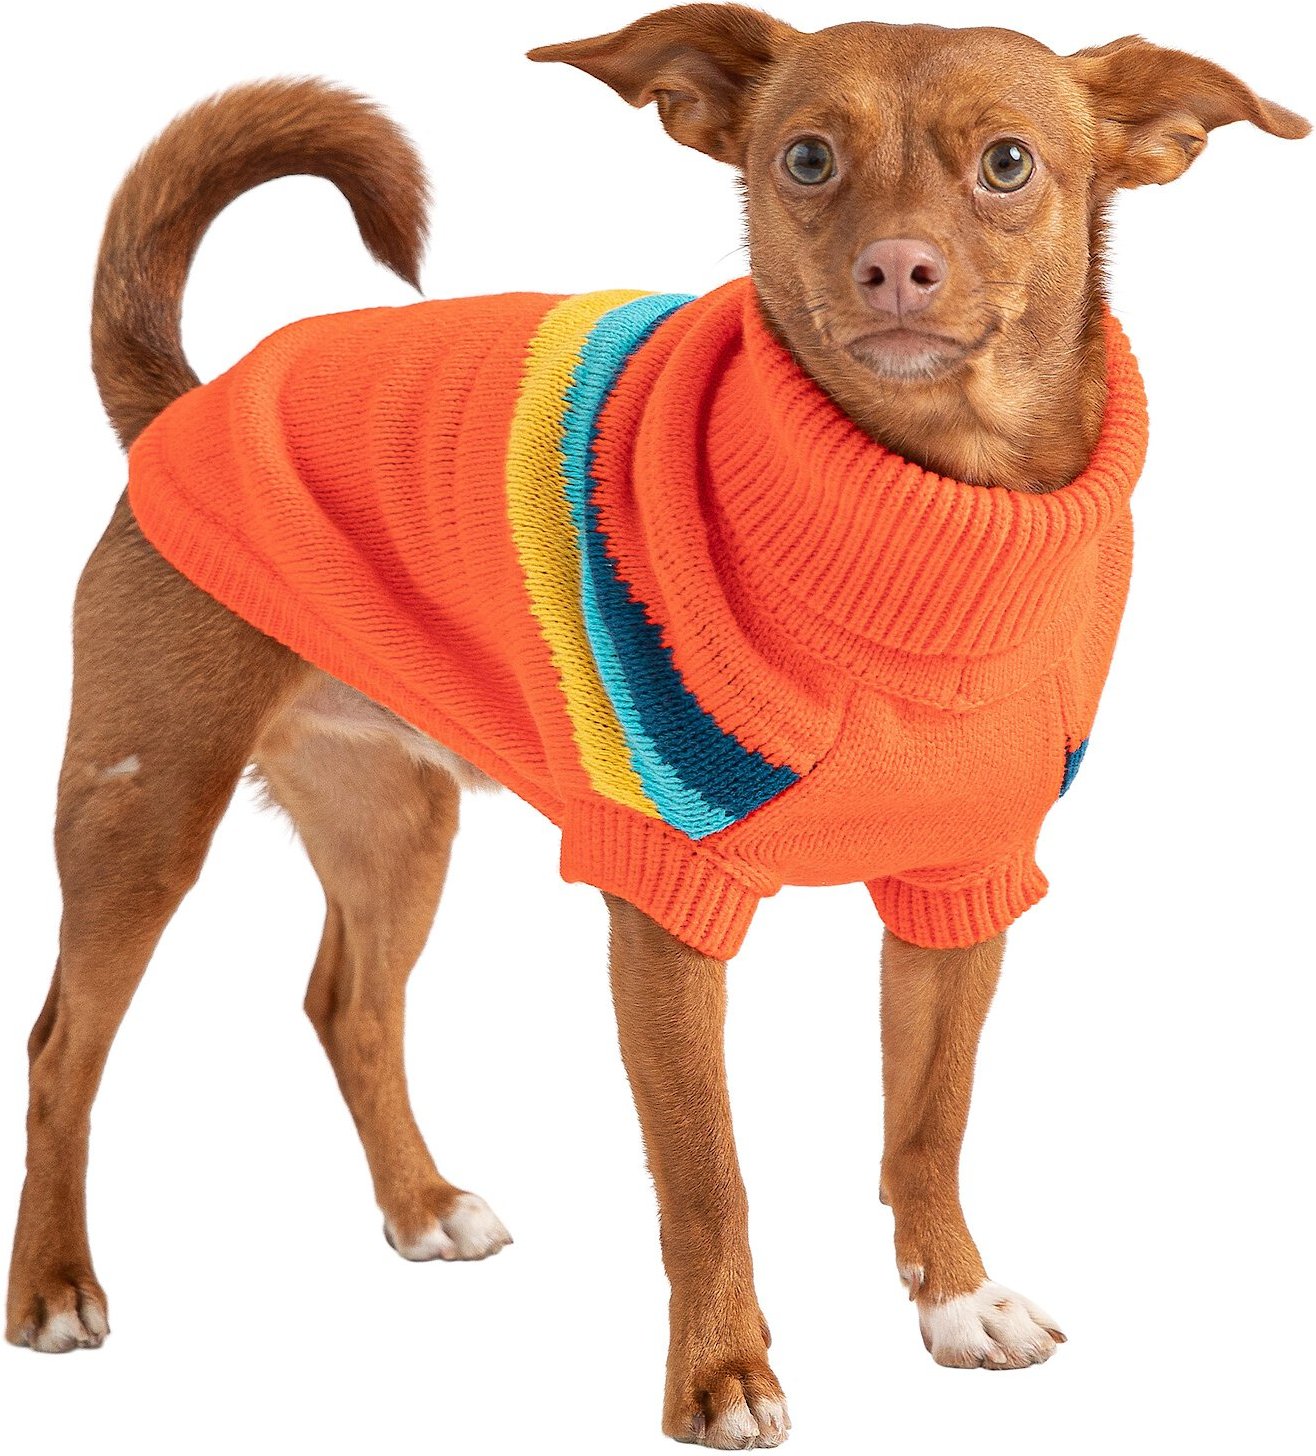 Dog Apparel Dog Clothing Orange Rib Knit Turtleneck Top Dog Fashion 